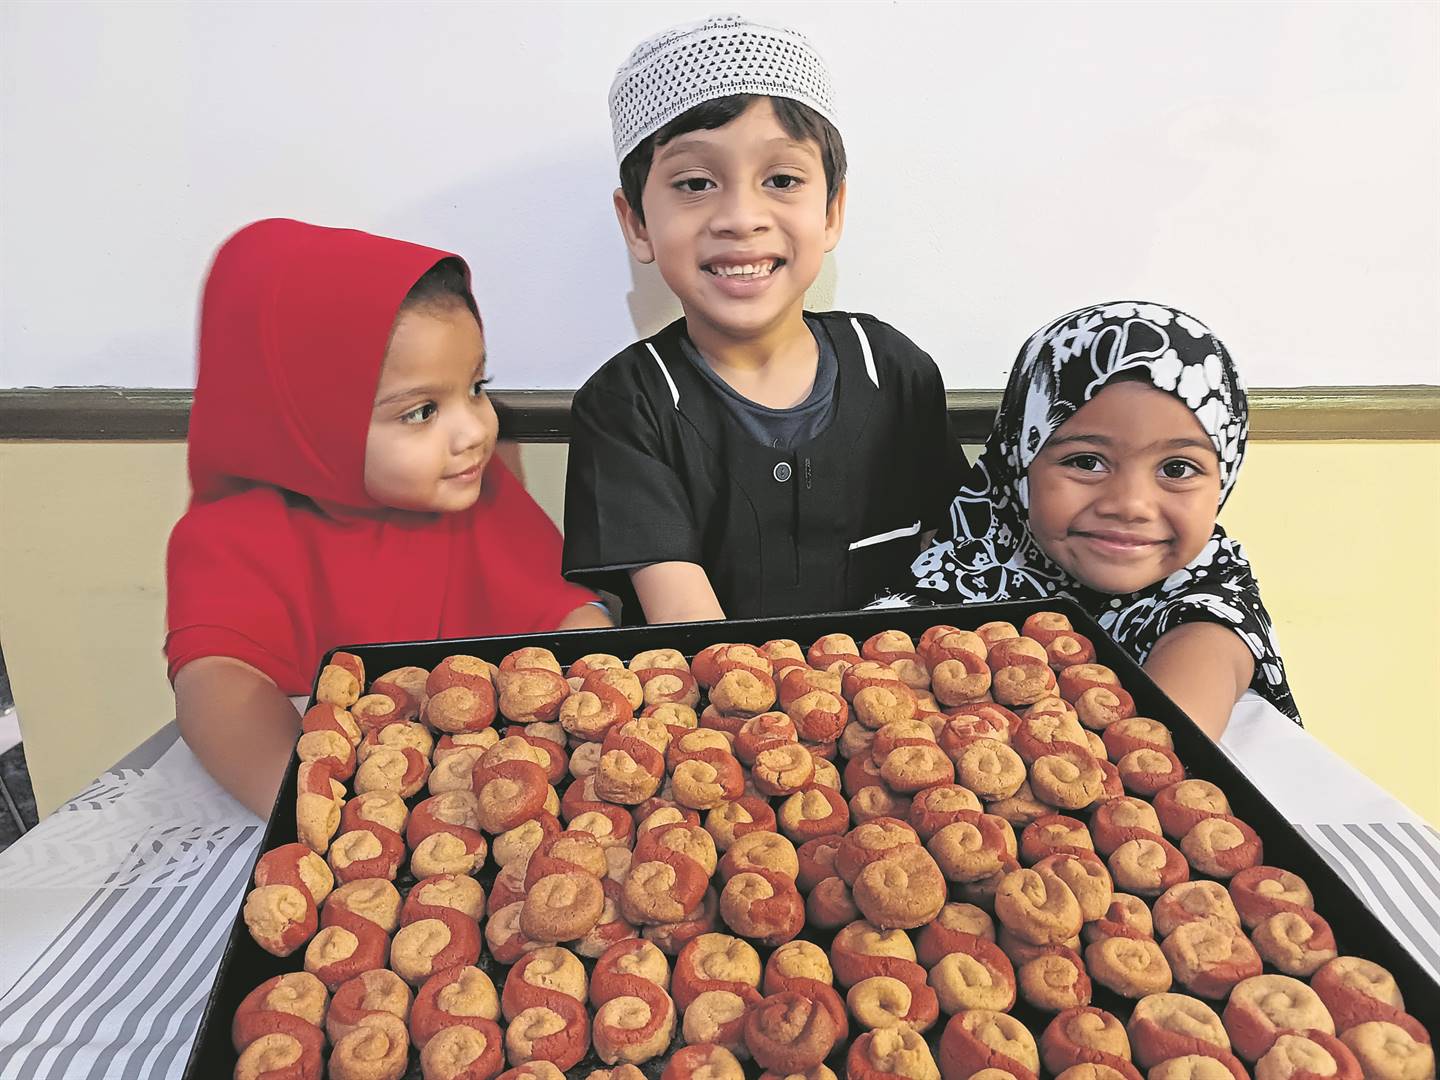 Essies are synonymous with Eid in Gqeberha. Freshly baked and ready for Eid, from left, Yusra Dowers (3) Ammaar Shaikh (6) and Haadiya Cupp (3) are waiting to enjoy their share.